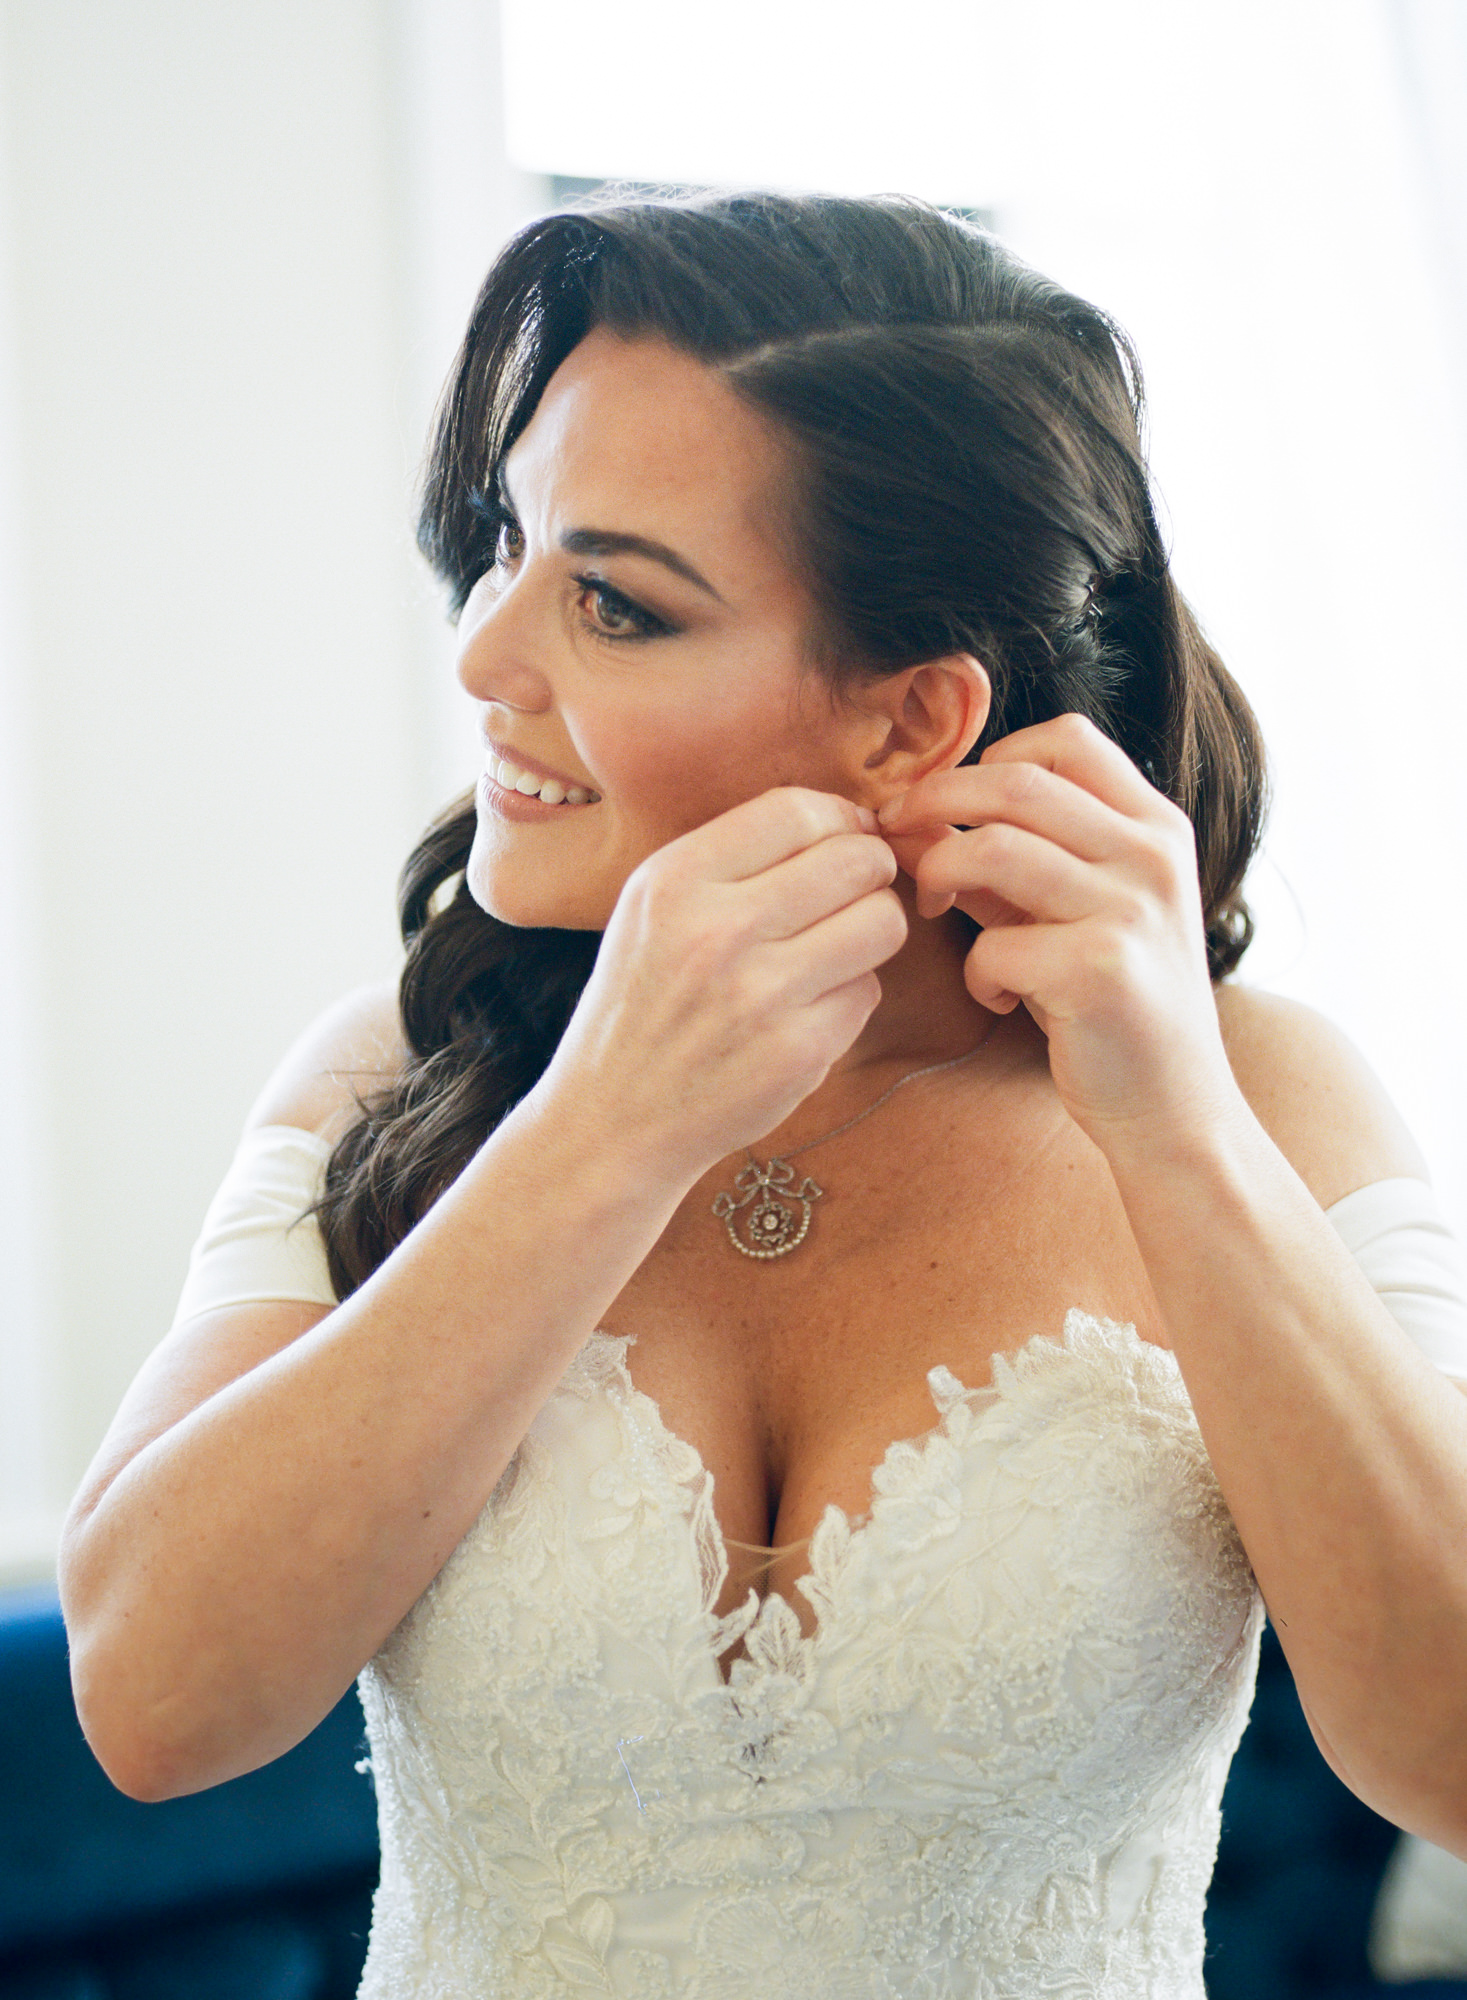 Bride putting on earrings; St. Louis fine art film wedding photographer Erica Robnett Photography